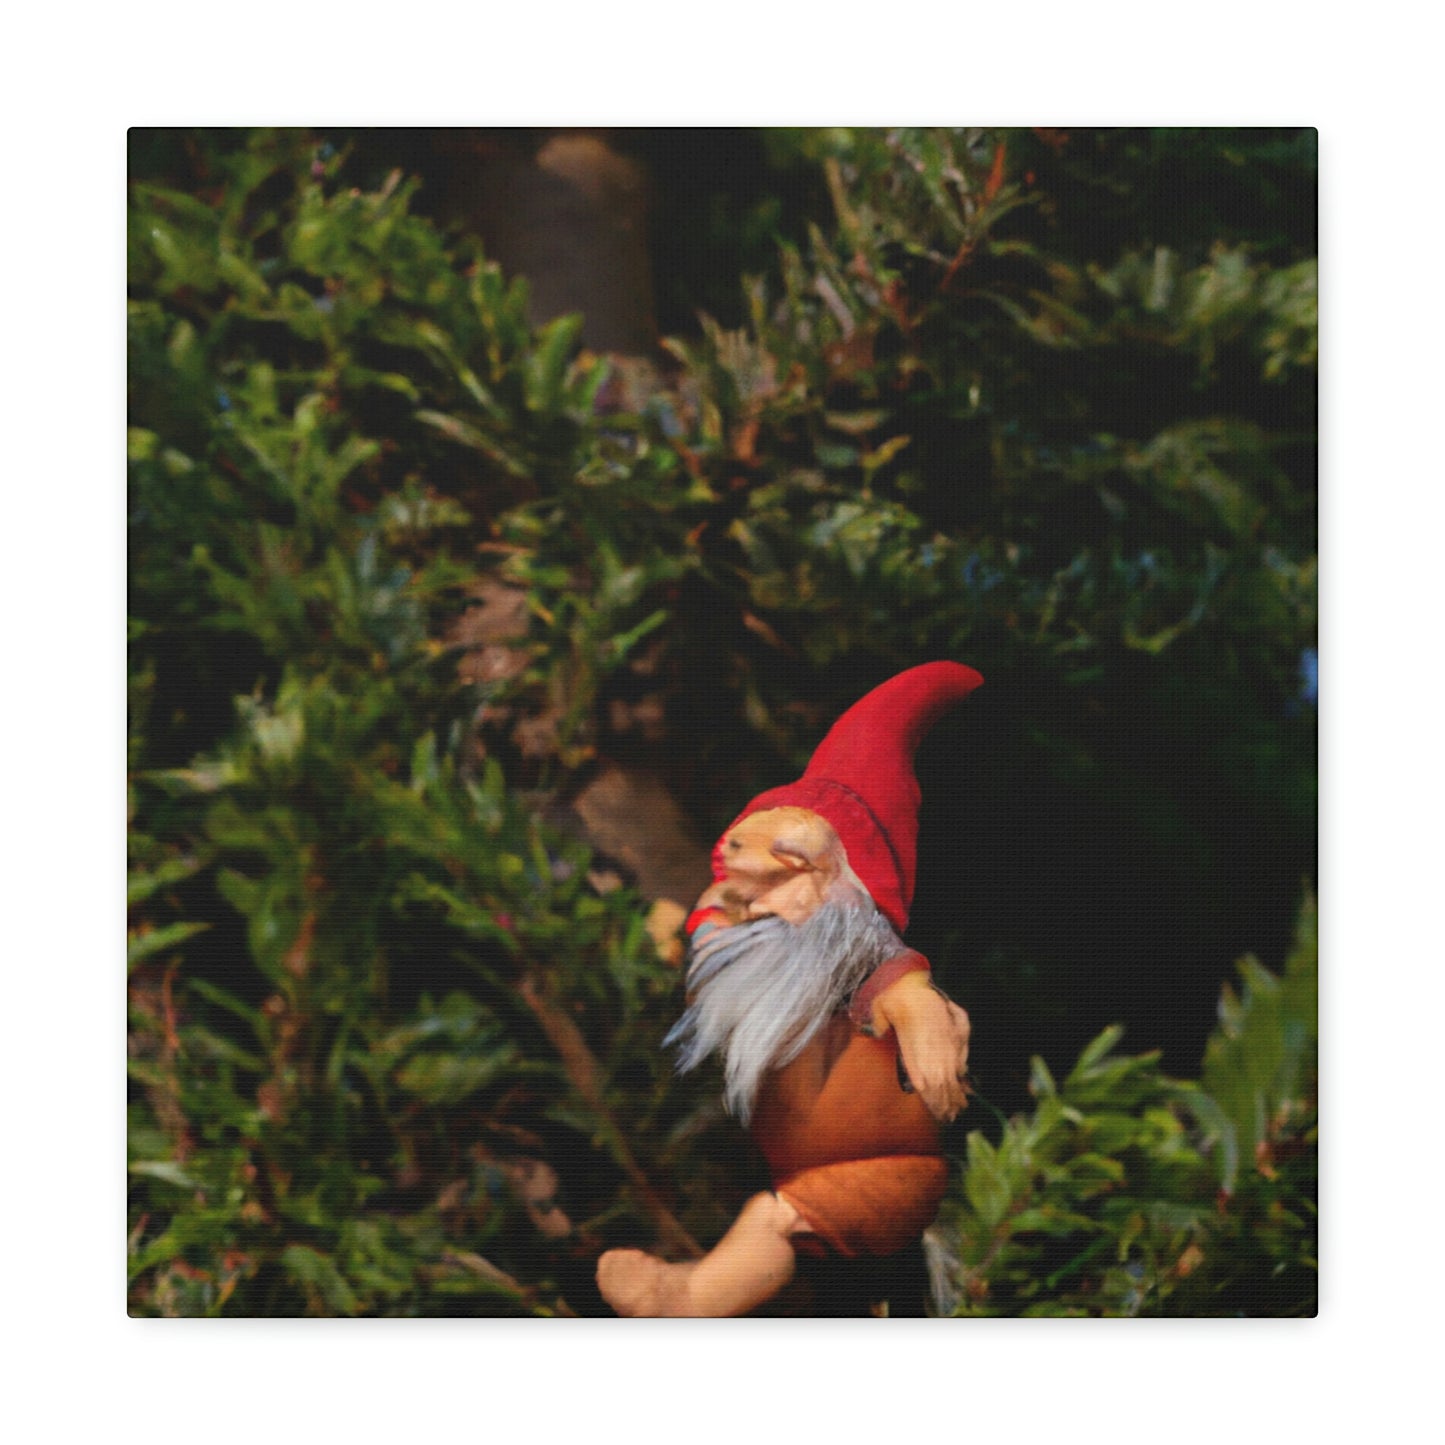 The Gnome's High-Rise Adventure - The Alien Canva